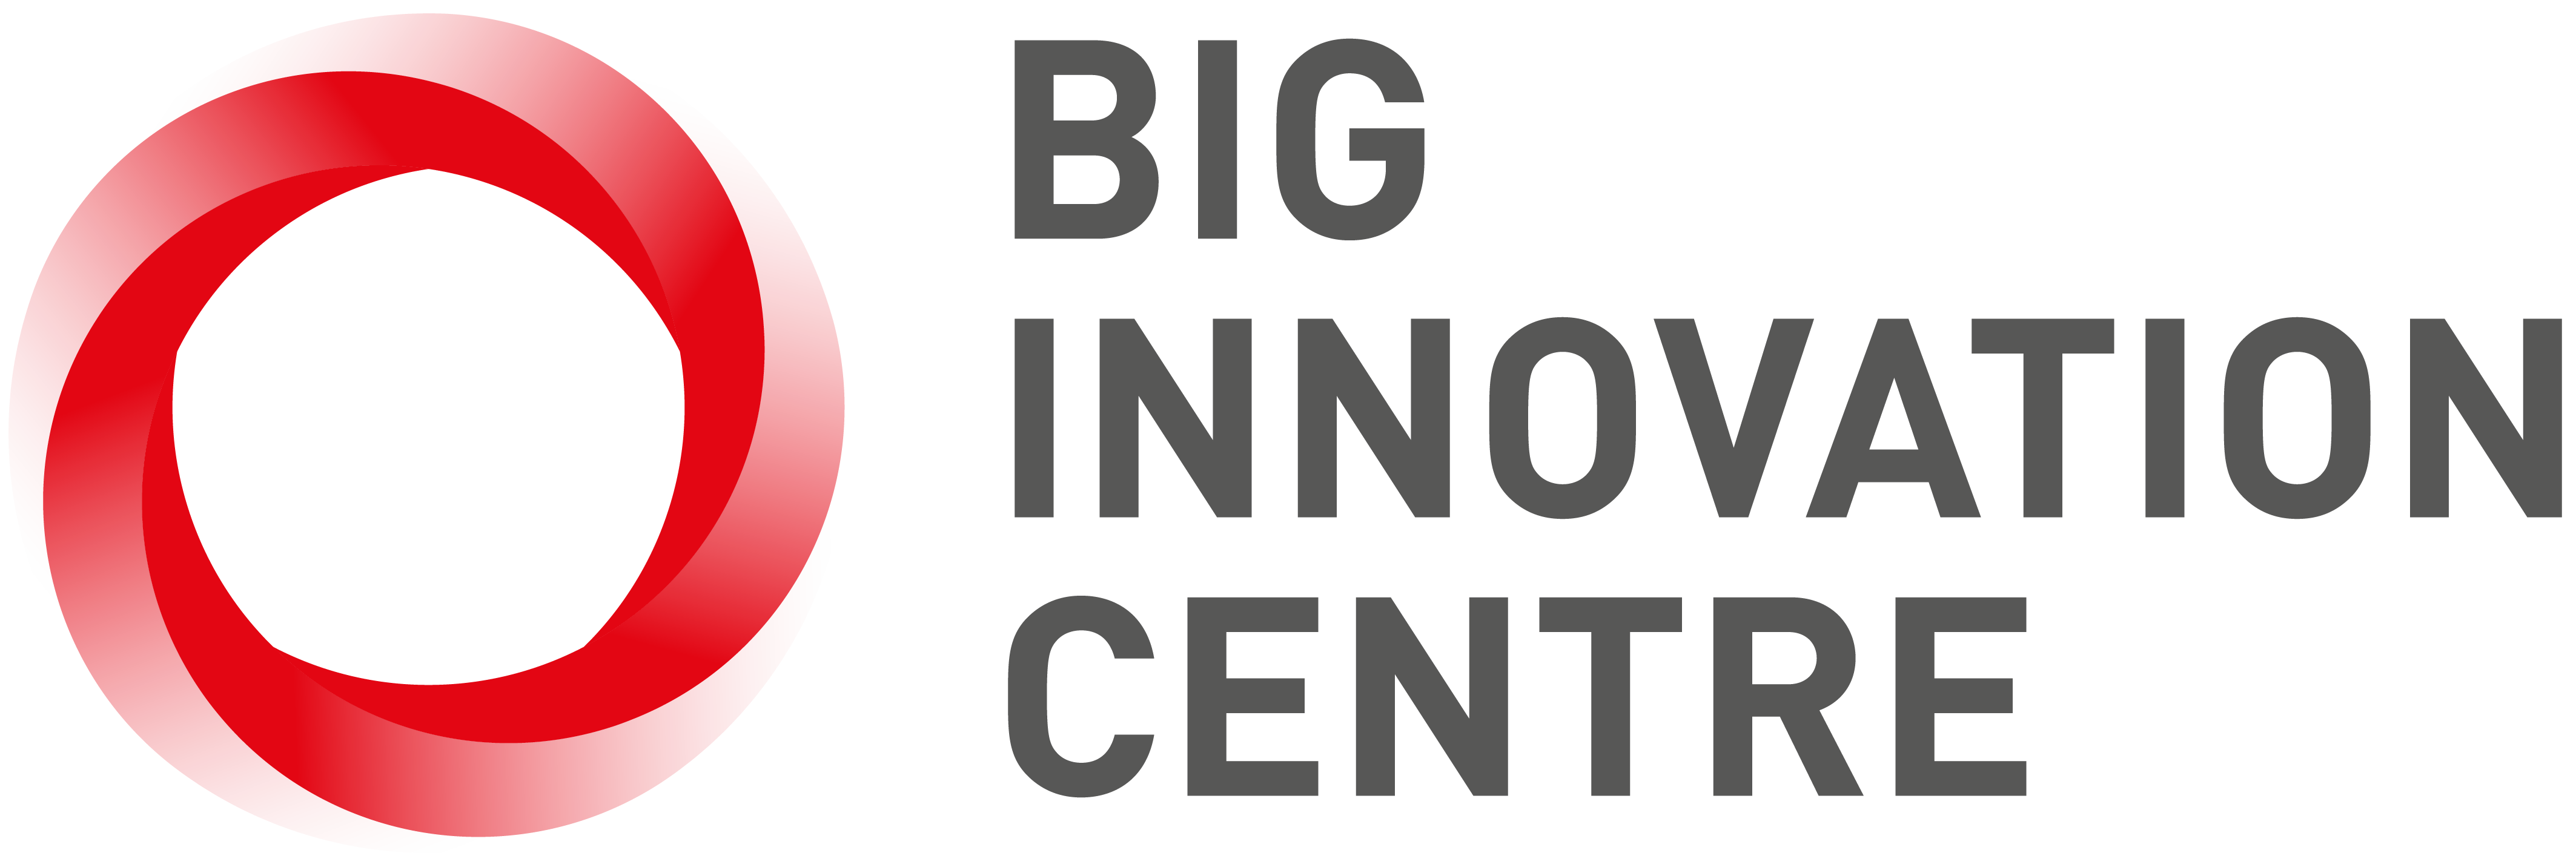 Big Innovation Centre's logo